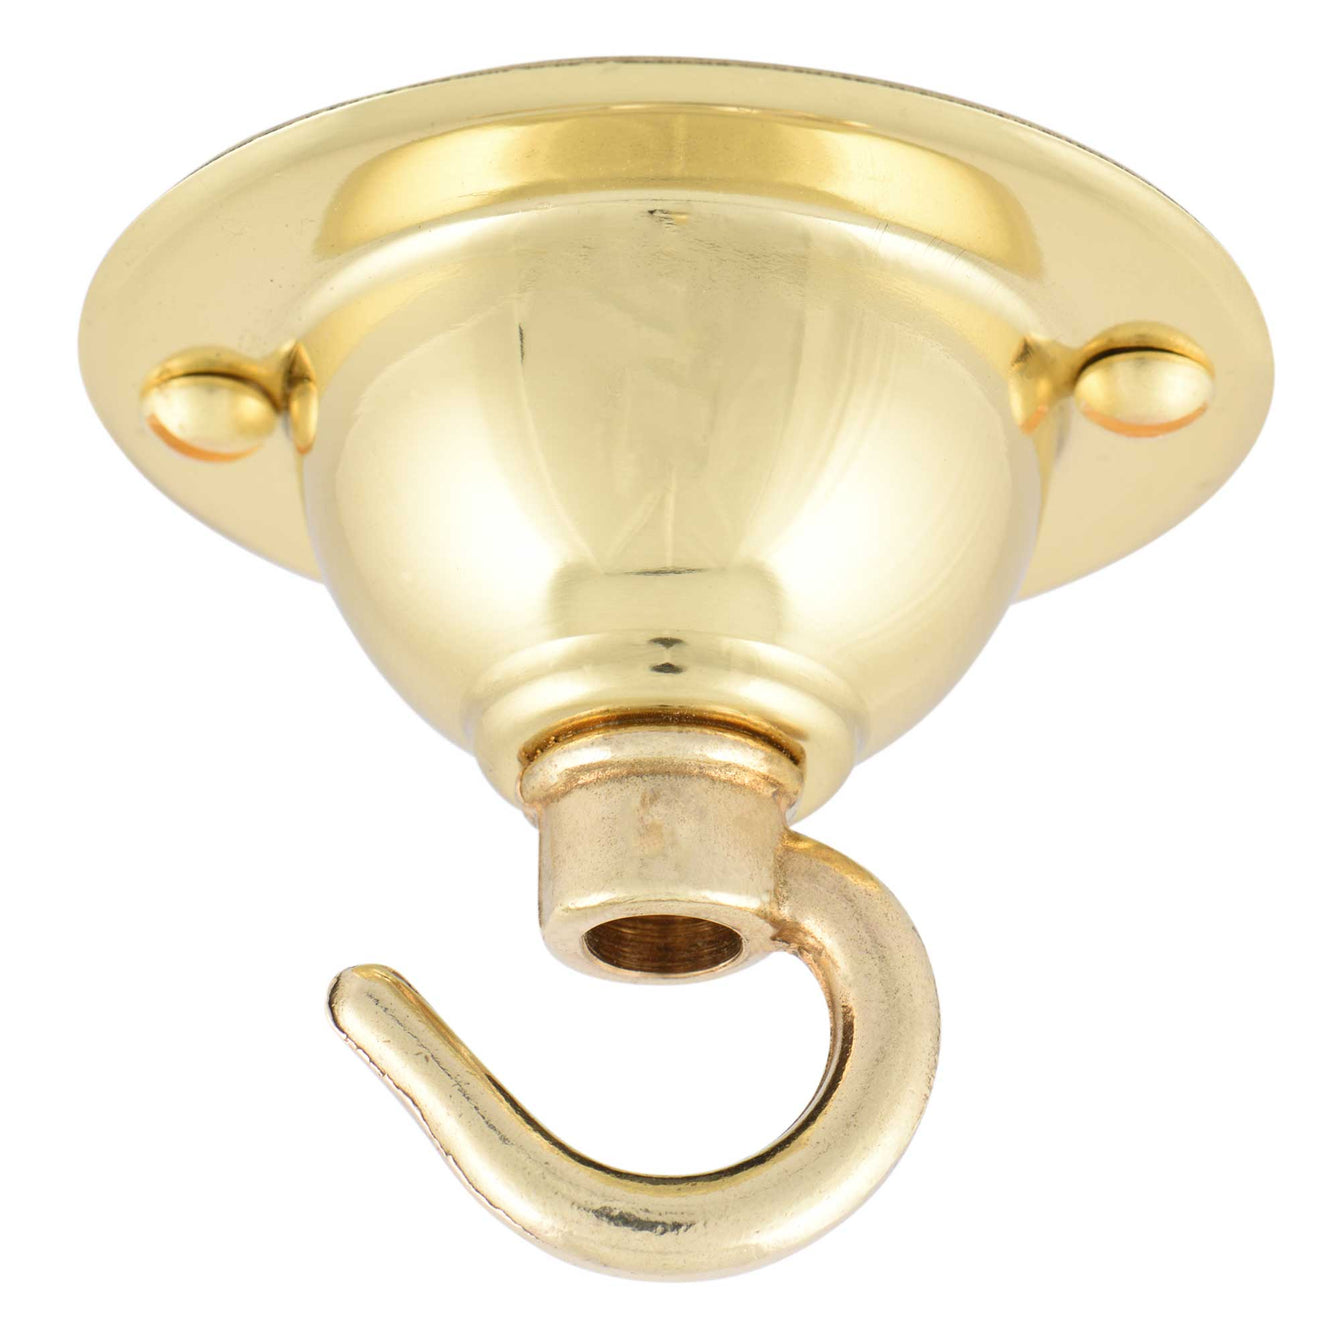 ElekTek 65mm Diameter Ceiling Rose Plate with Hook For Chandeliers Metallic Finishes Antique Brass